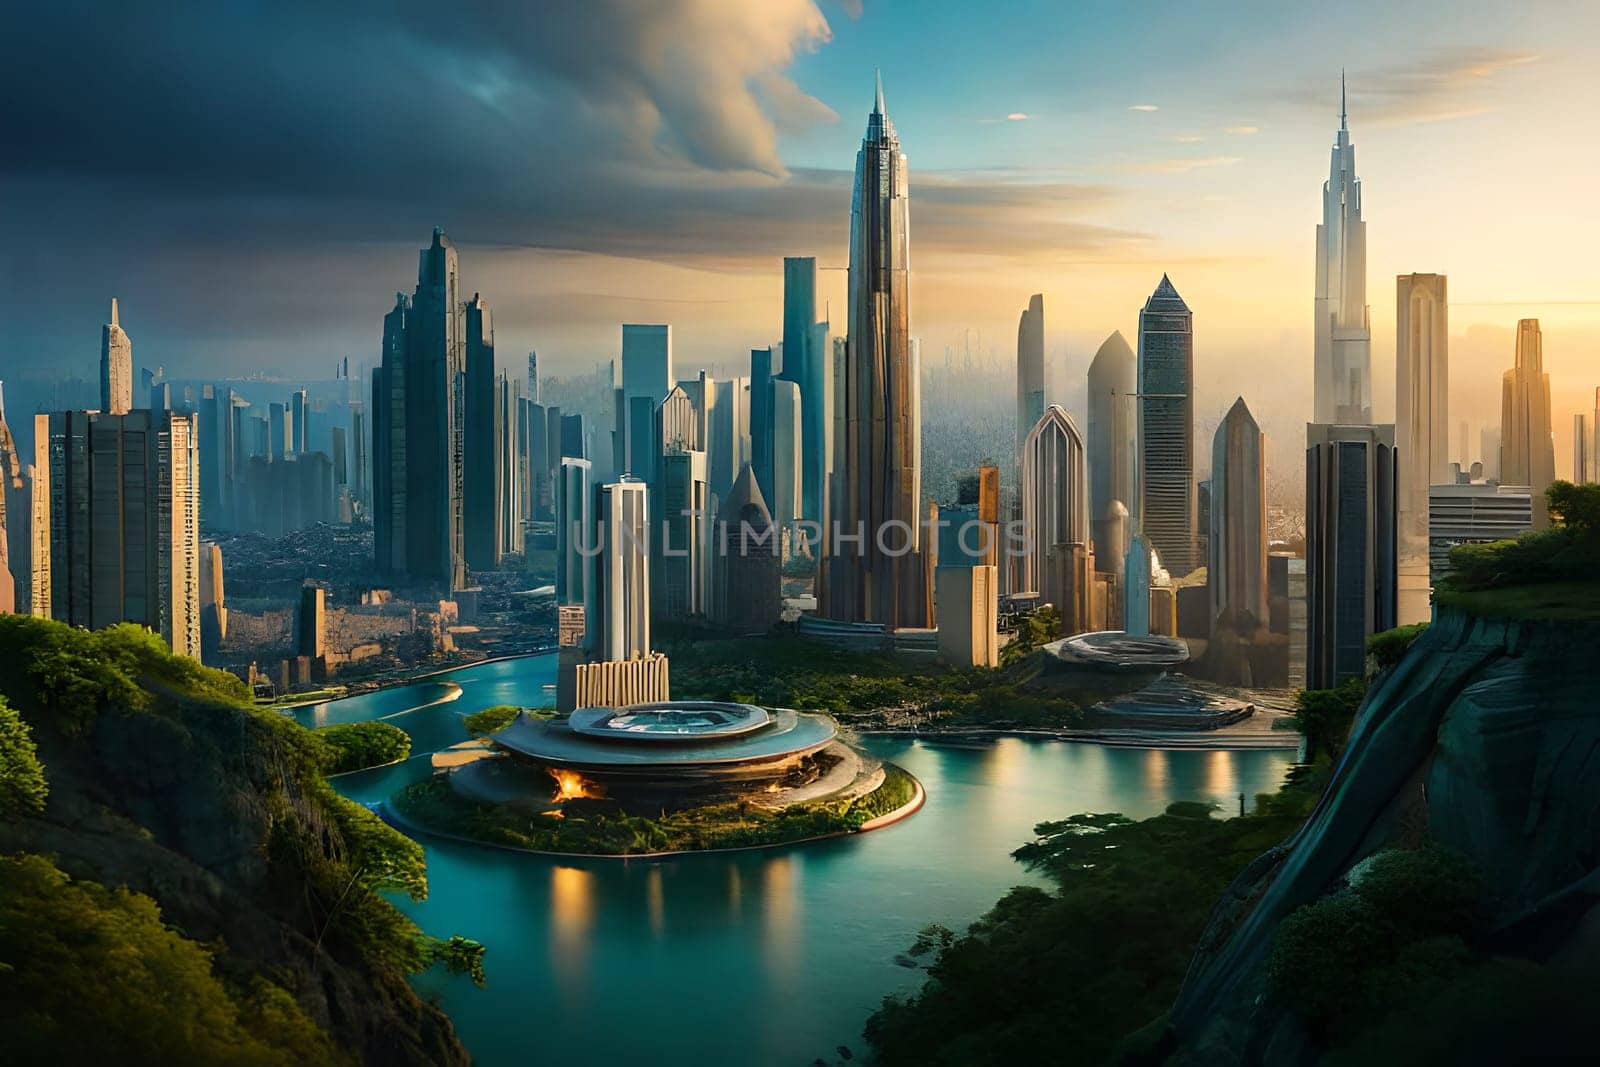 futuristic rendering city megacity cyberpunk scifi 3D illustration by milastokerpro